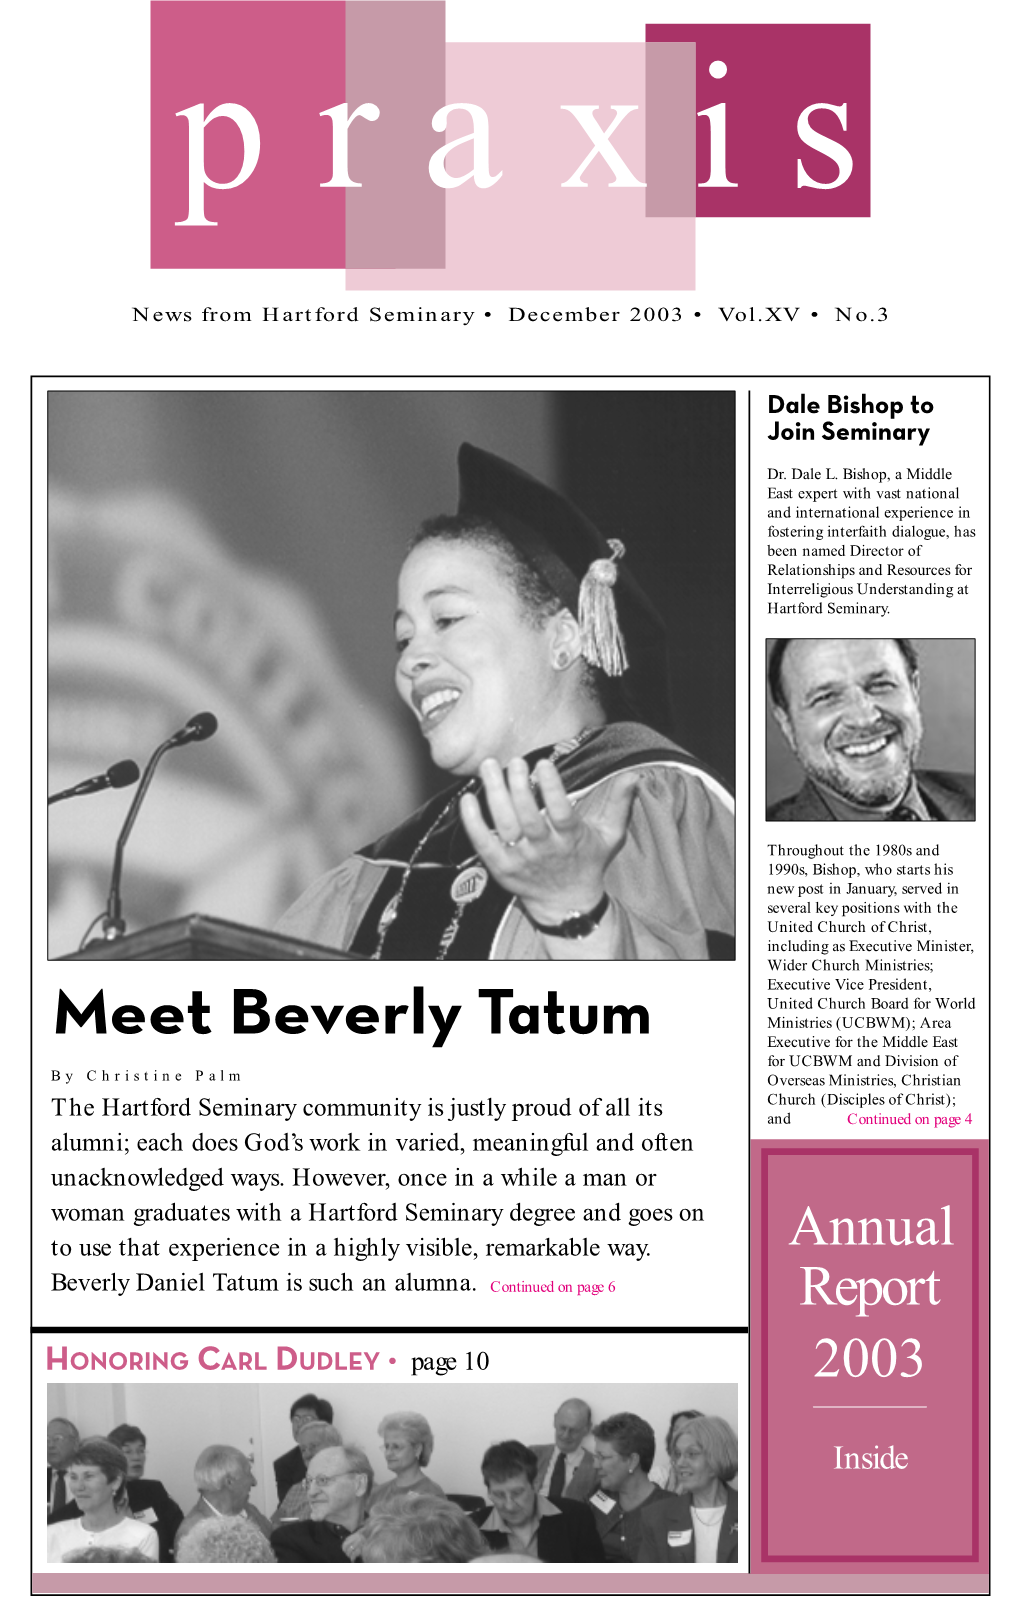 Meet Beverly Tatum